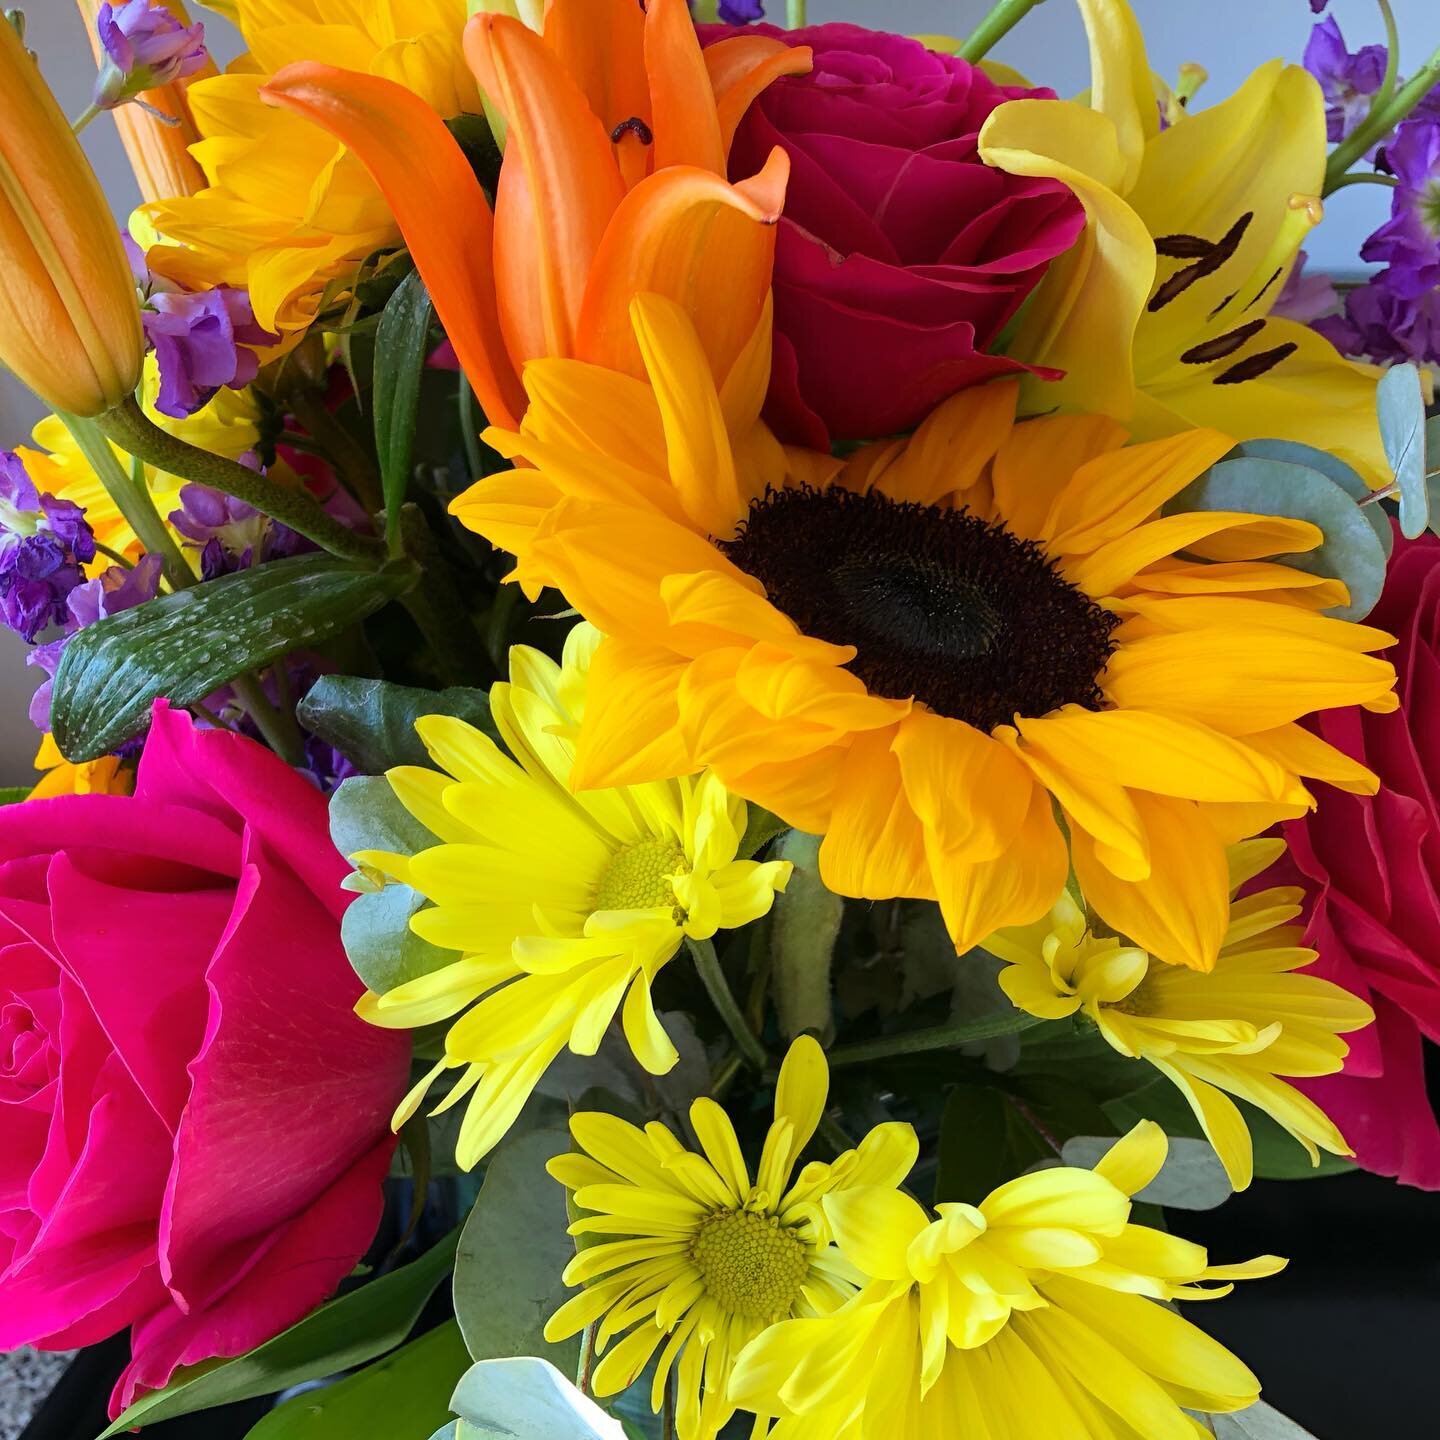 Joy by delivery. 

#flowerstagram